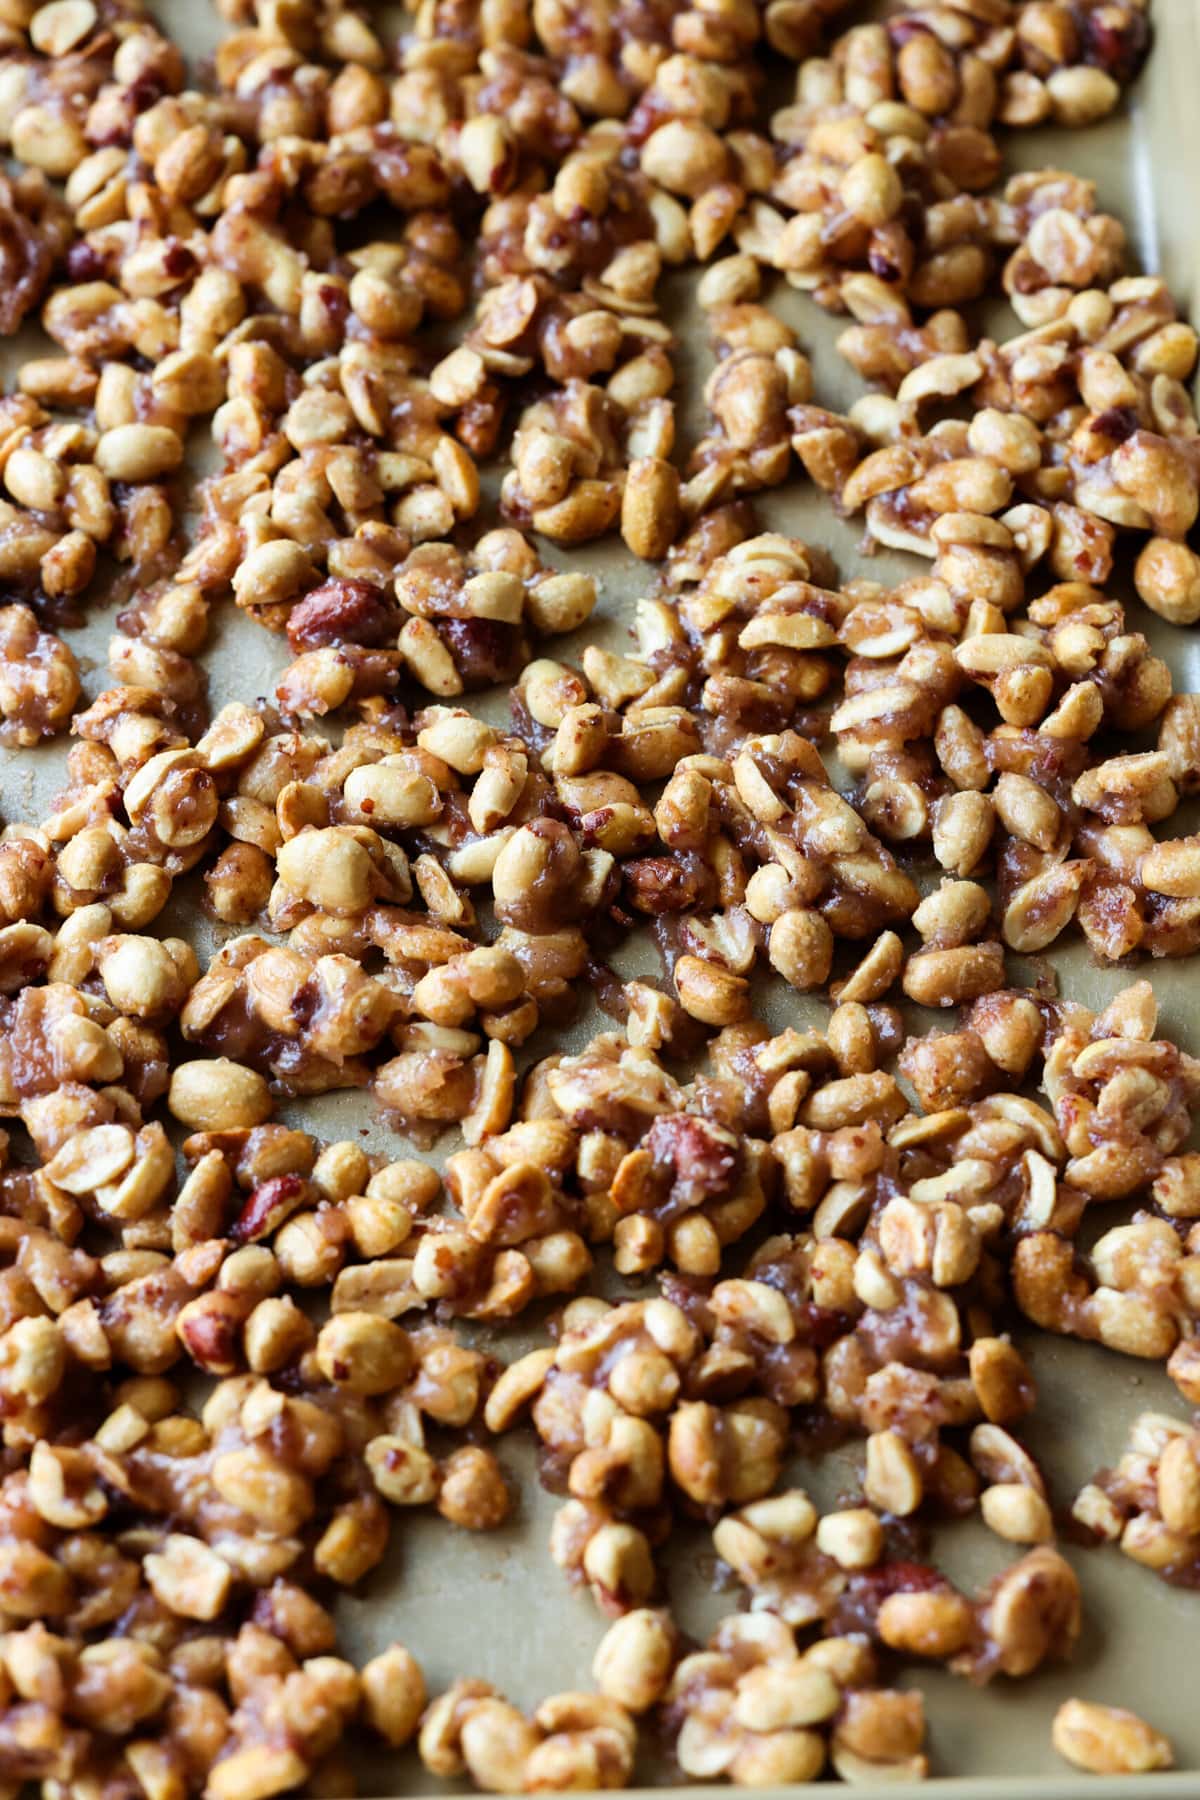 Caramel peanuts in a pan